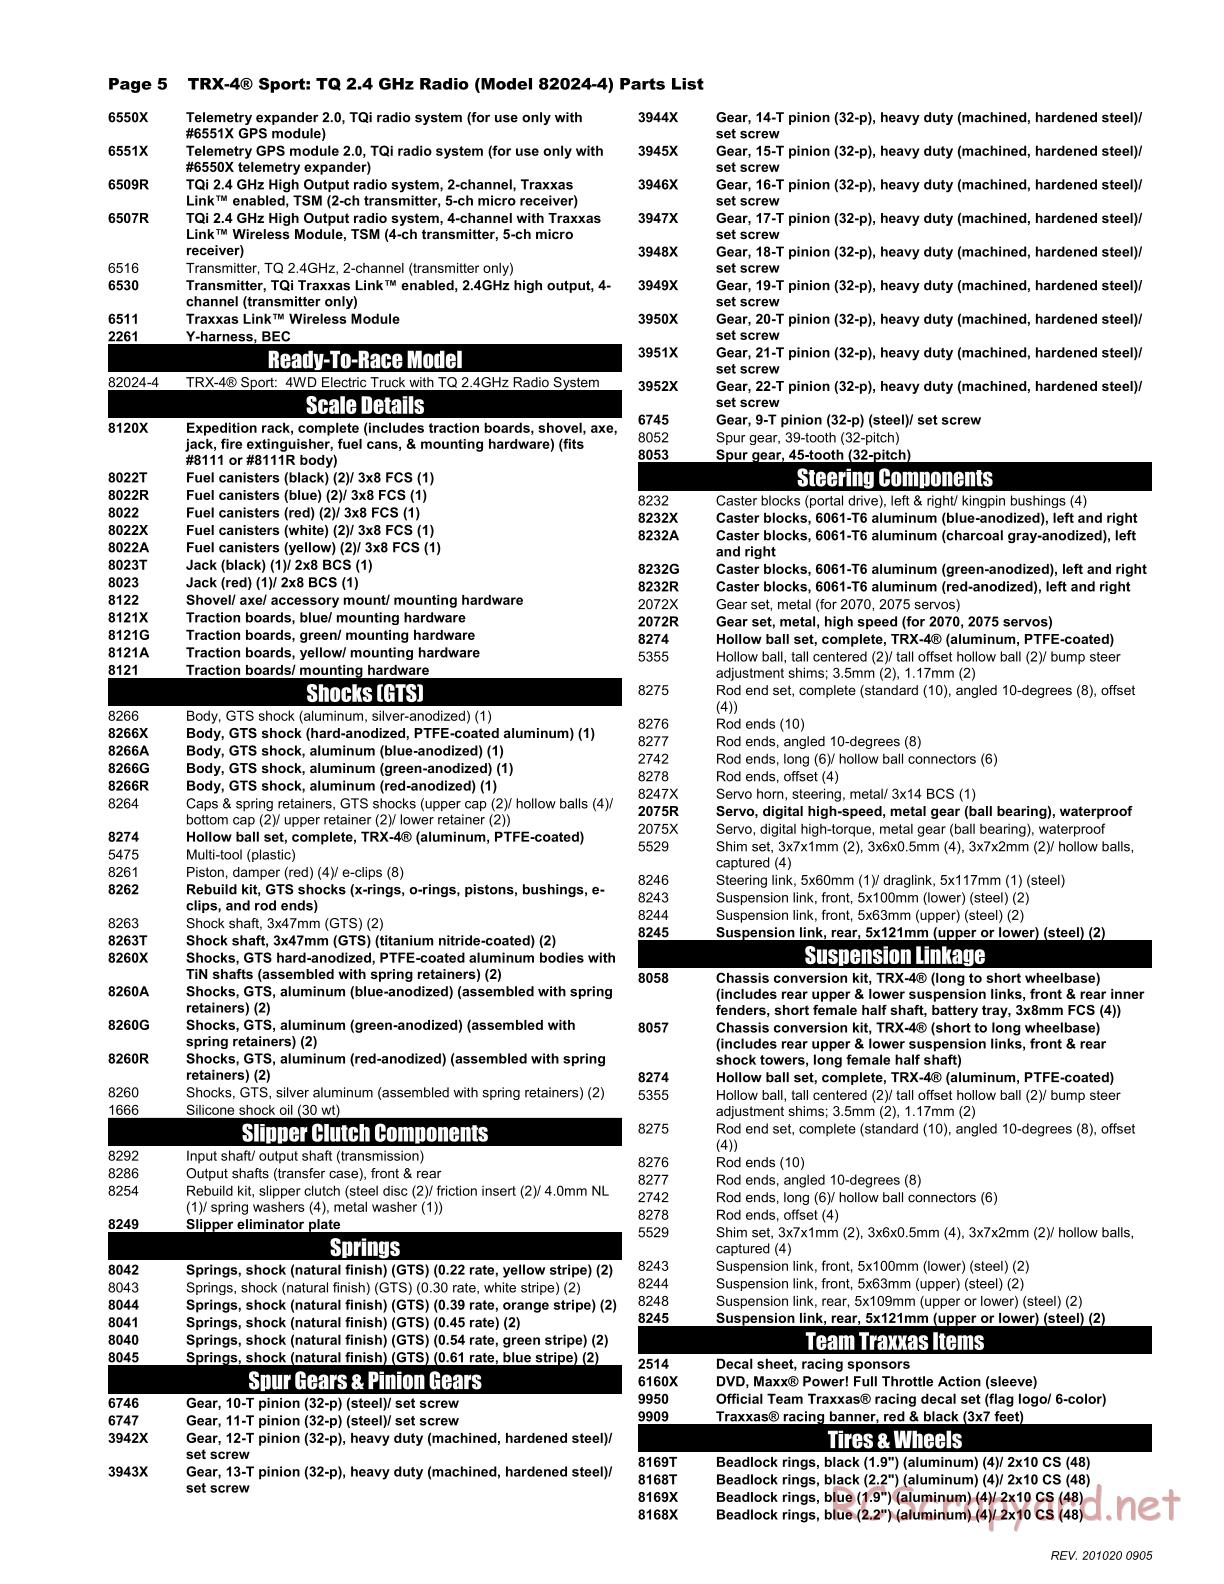 Traxxas - TRX-4 Sport - Parts List - Page 5